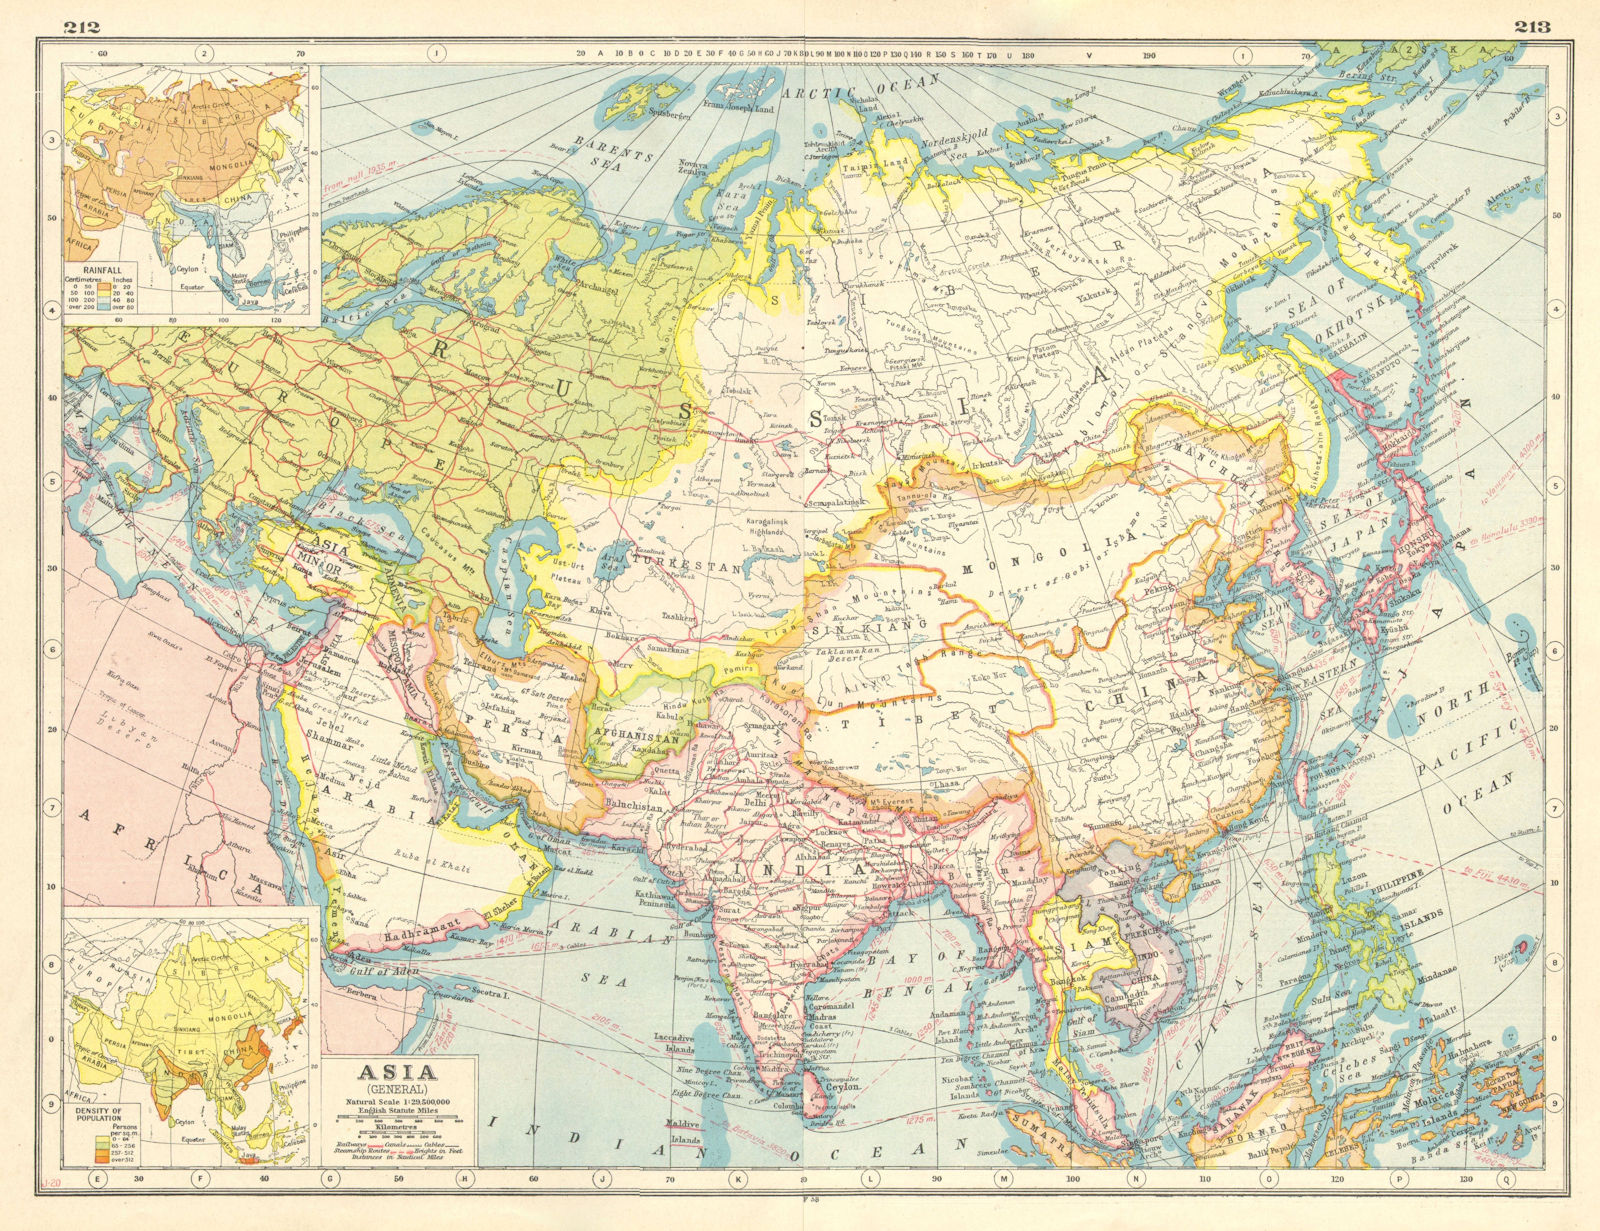 ASIA. Mesopotamia Asir Hejaz El Hasa Persia Siam Chosen Fr. Indochina 1920 map